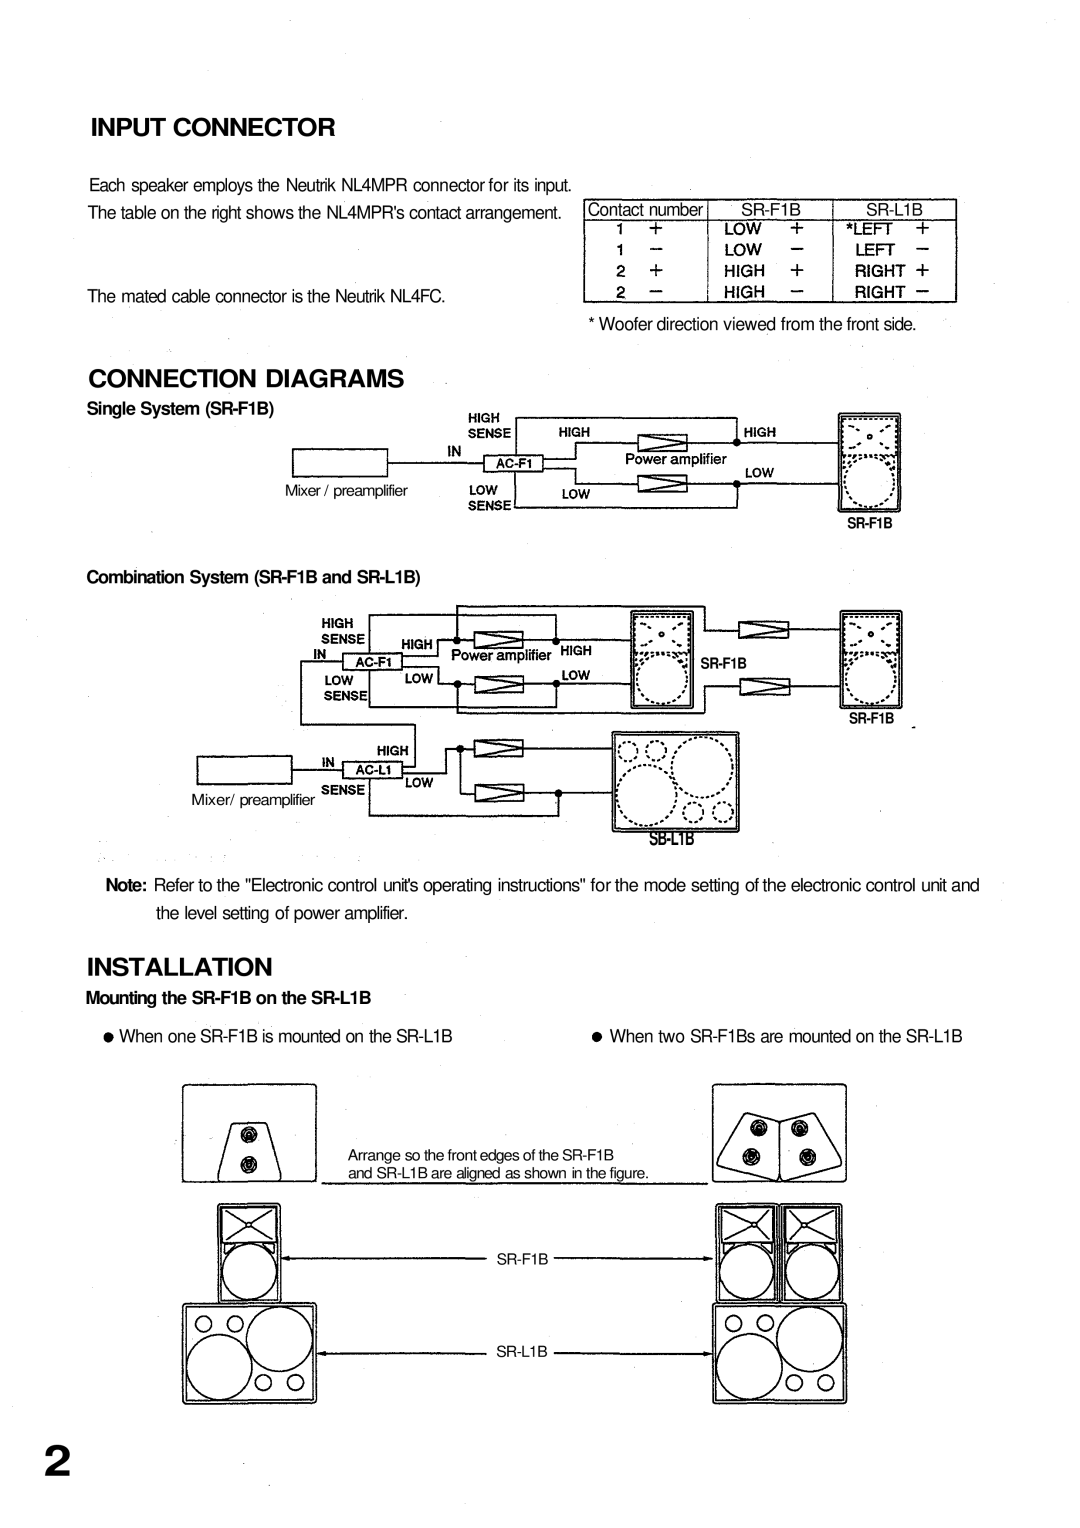 Verizon SR-F1B manual Input Connector, Connection Diagrams, Installation, SB-L1B 